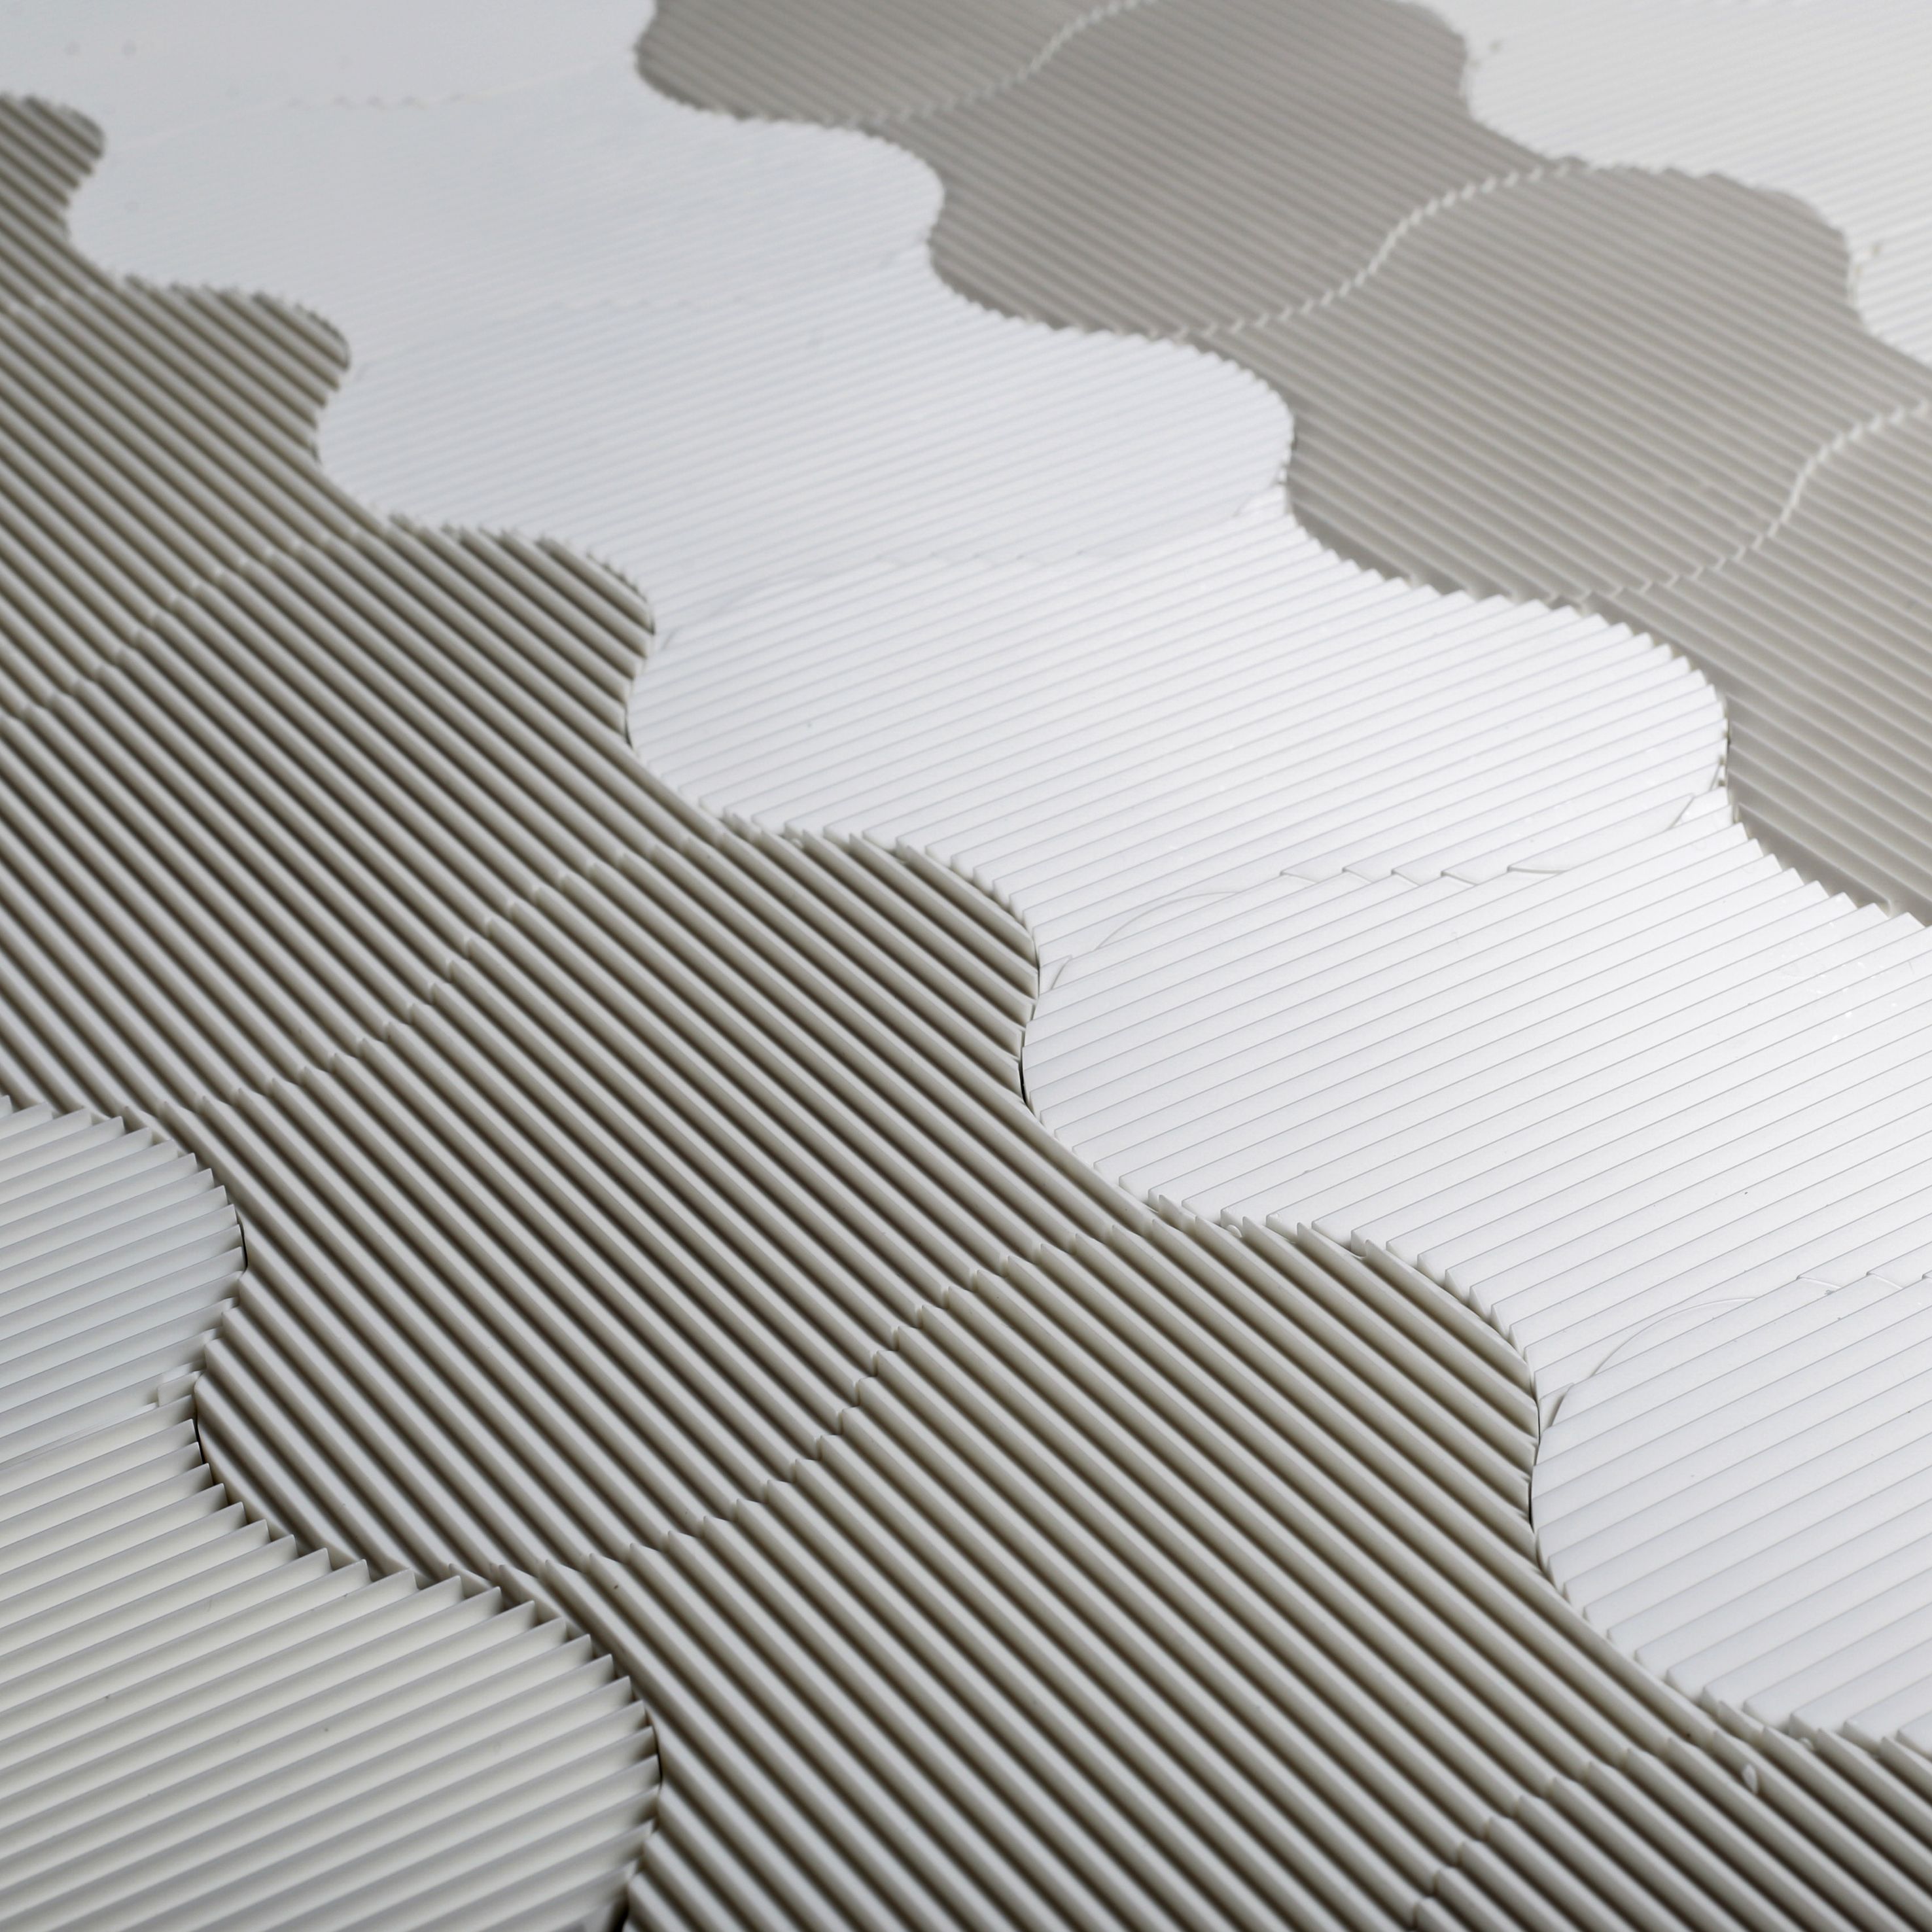 White Plastic organic tile | Our Surfaces | Pinterest | Organic